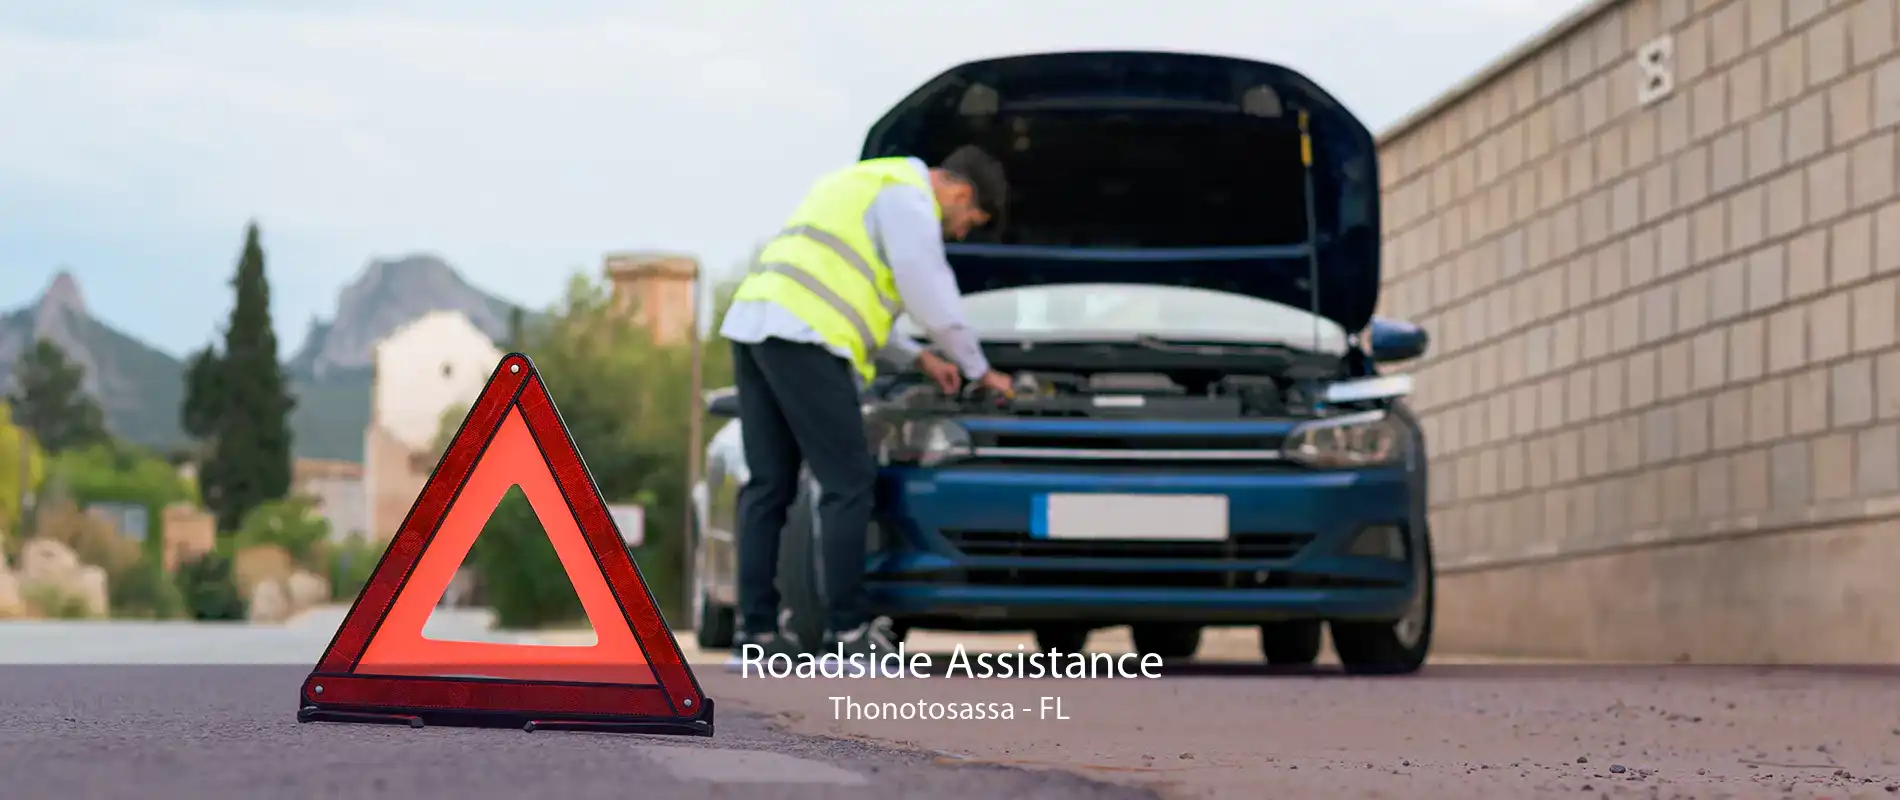 Roadside Assistance Thonotosassa - FL